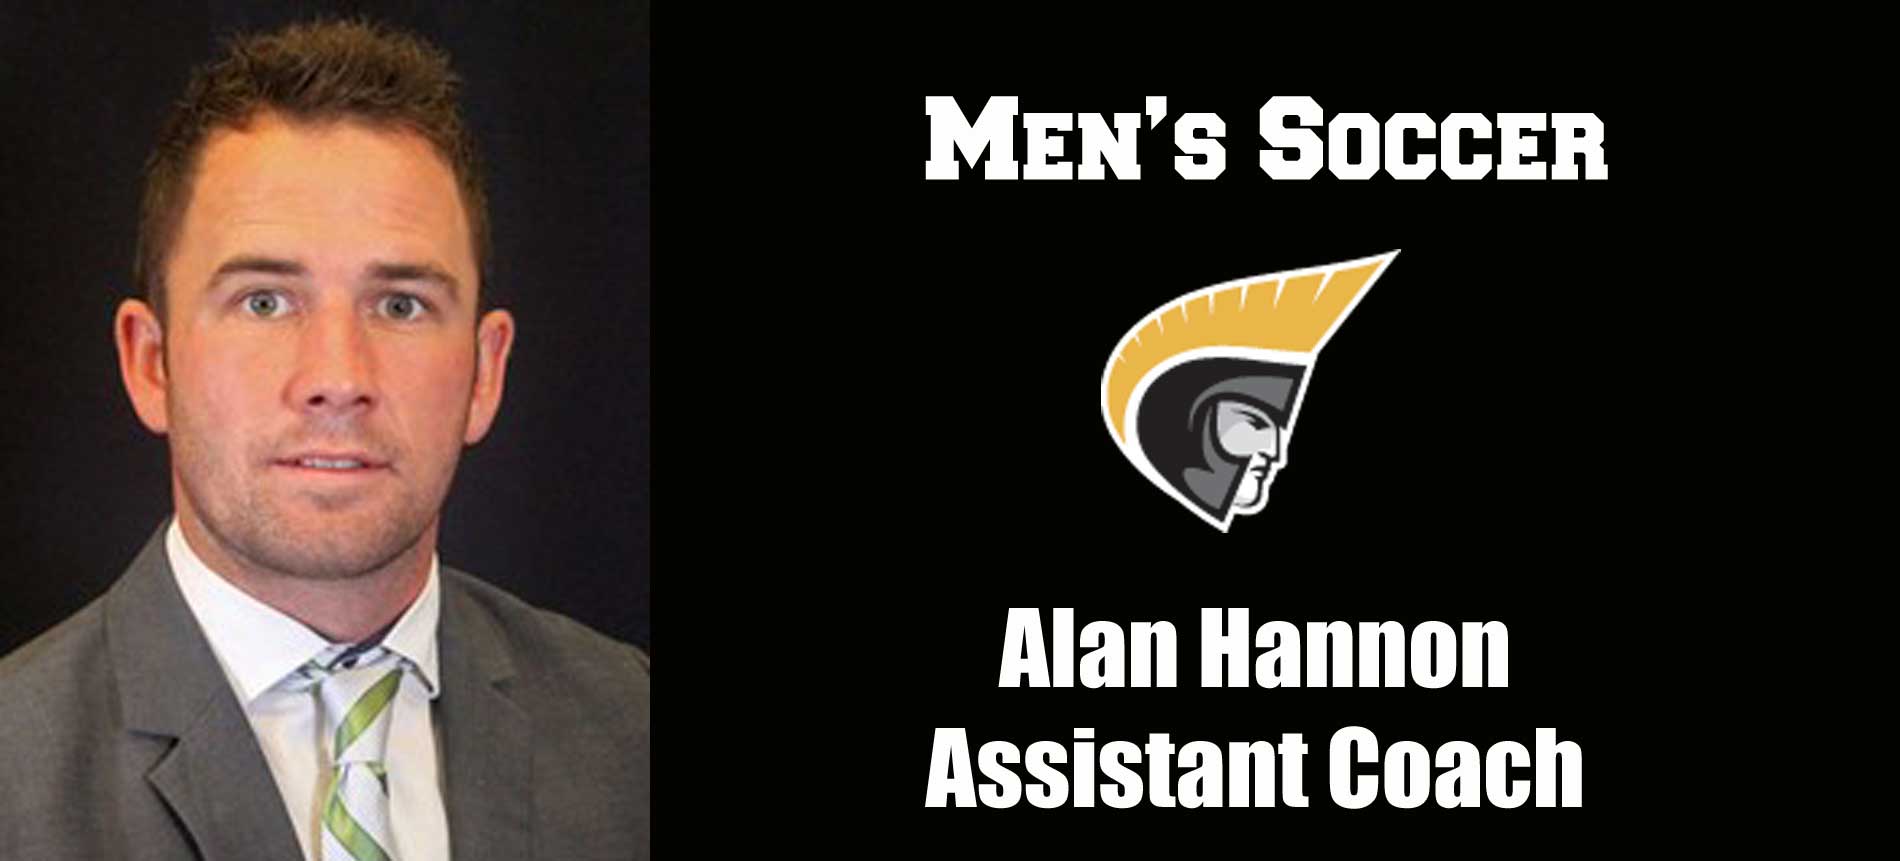 Hannon Named Men’s Soccer Assistant Coach